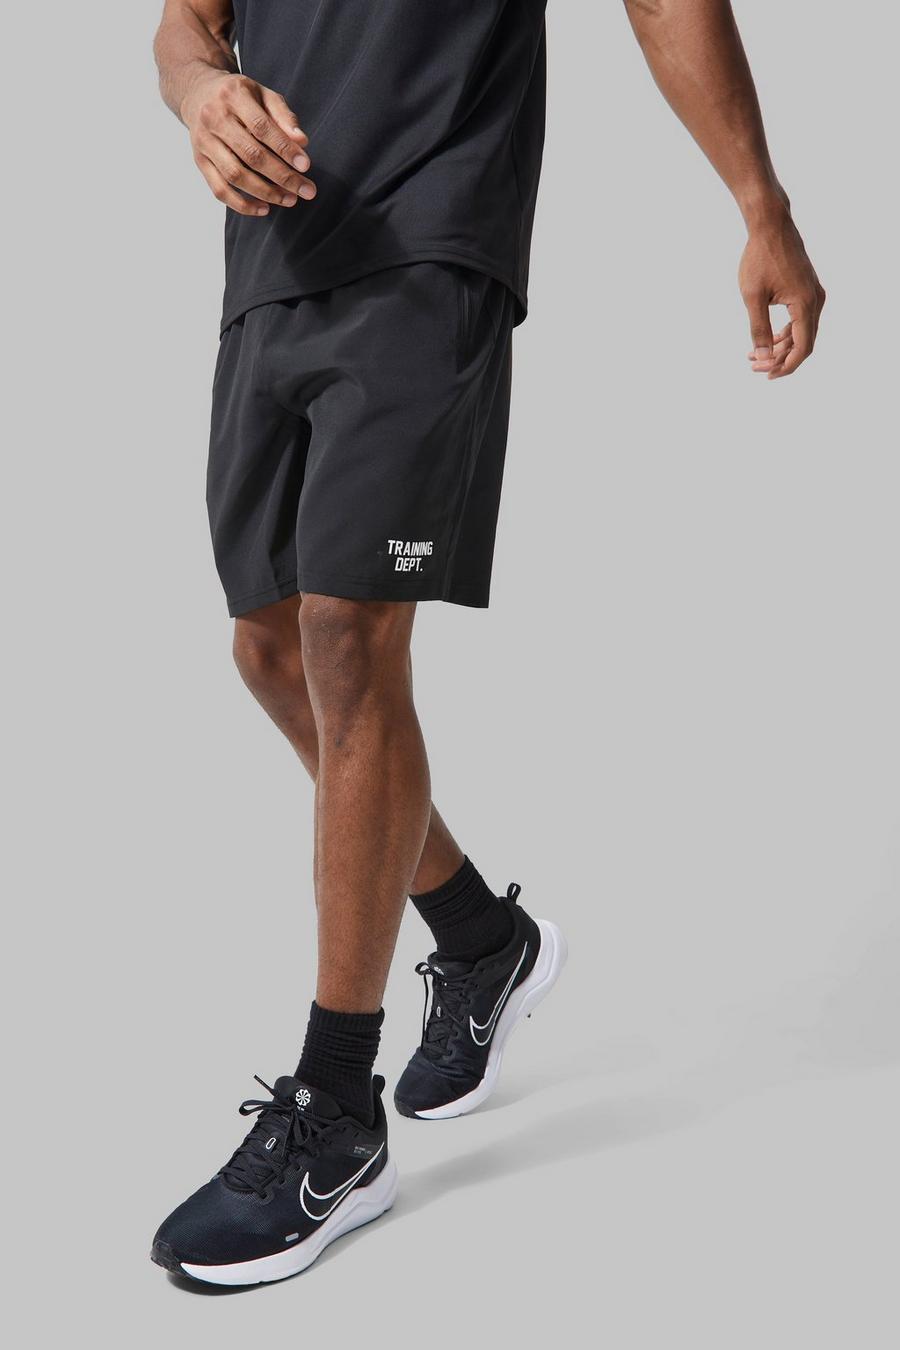 Pantalón corto MAN Active resistente Training Dept, Black nero